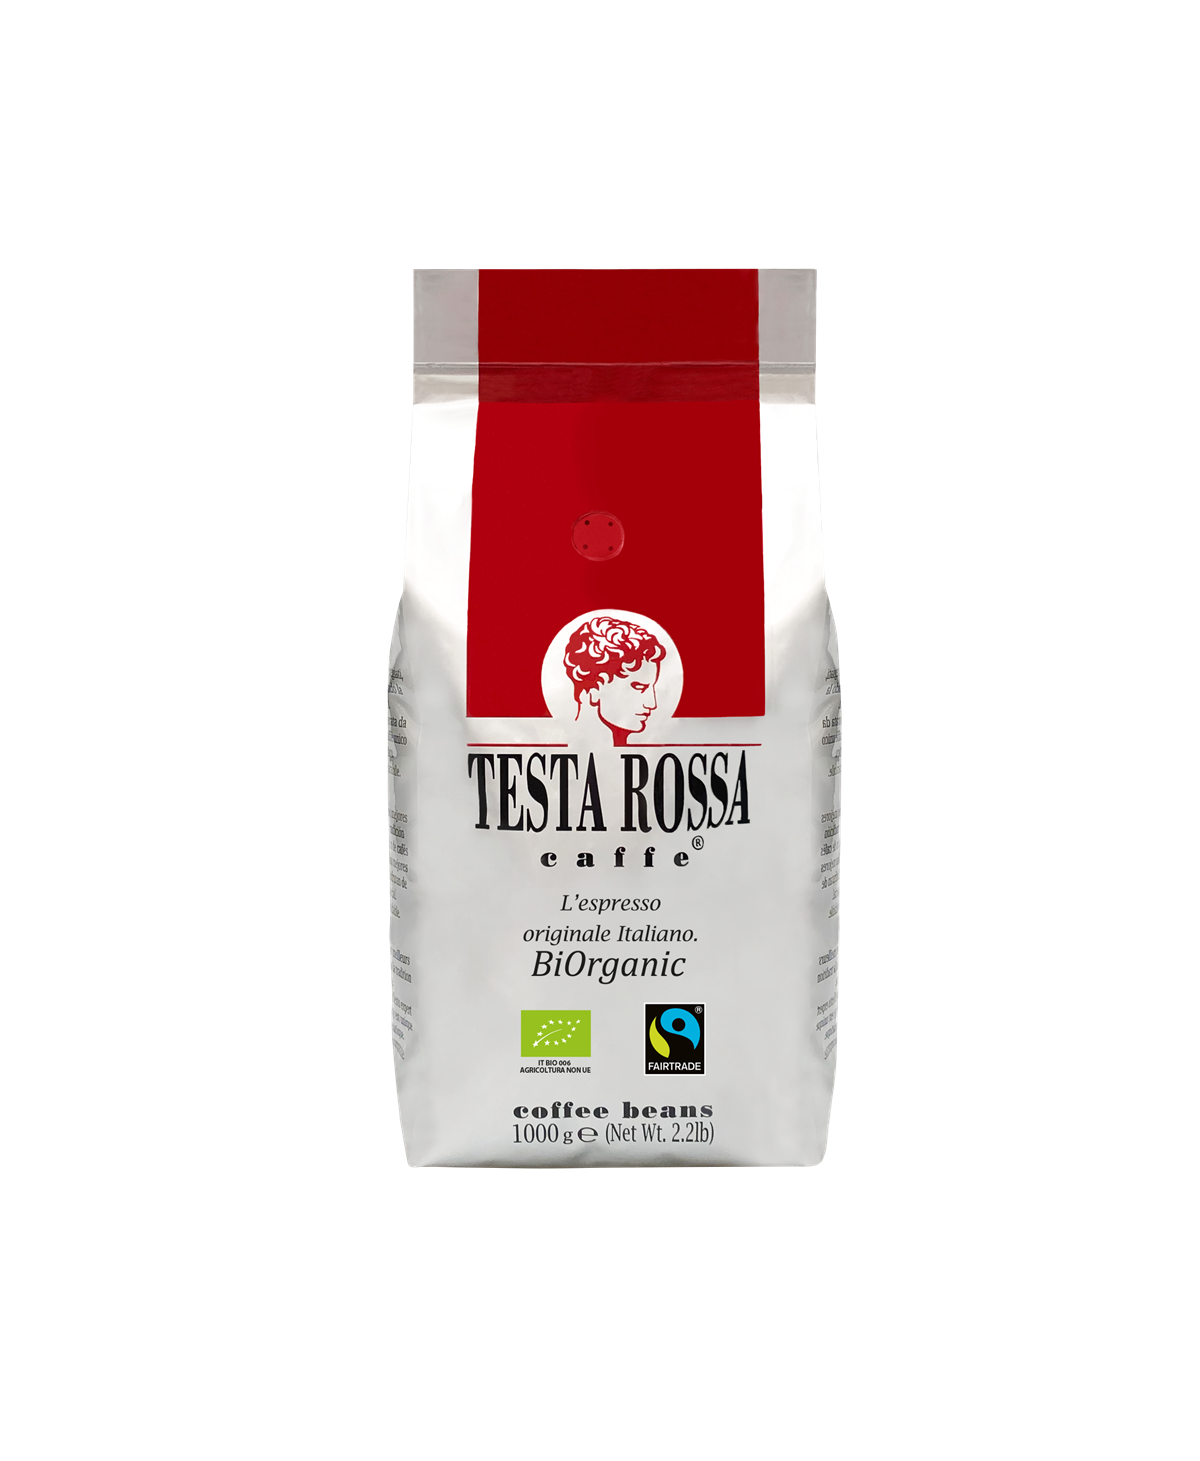  Testa Rossa caffè BiOrganic - bio & fairtrade